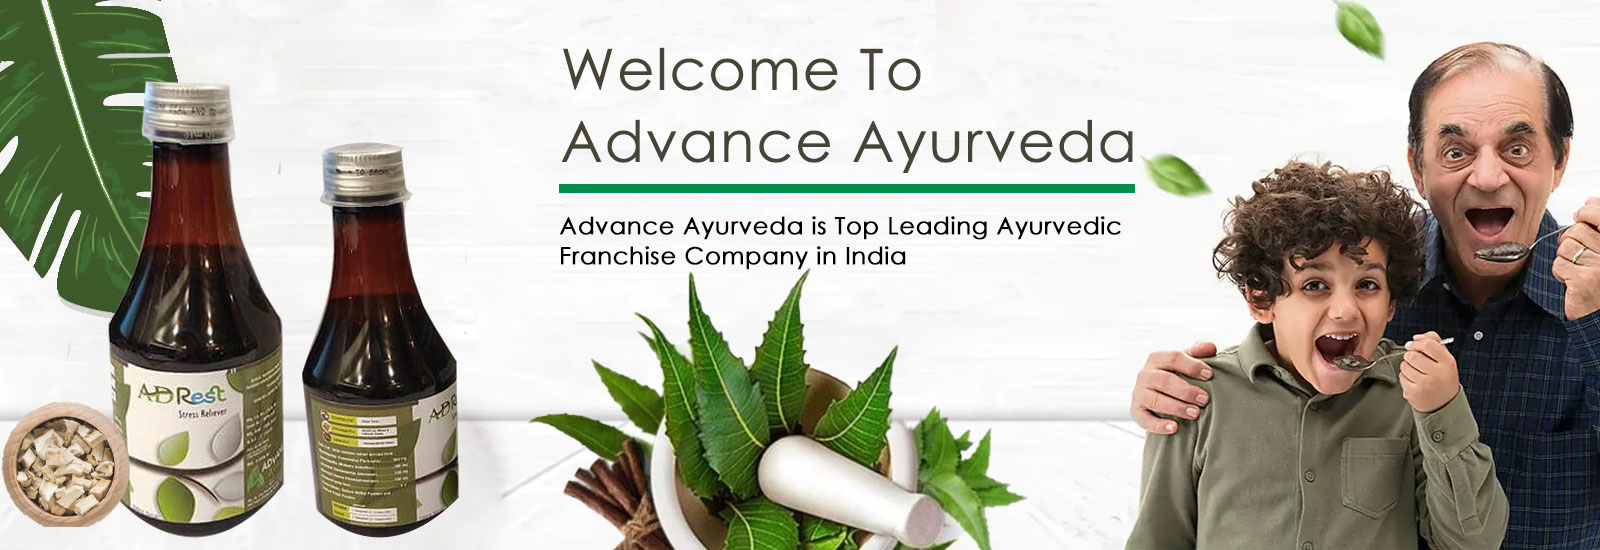 best ayurvedic franchise company